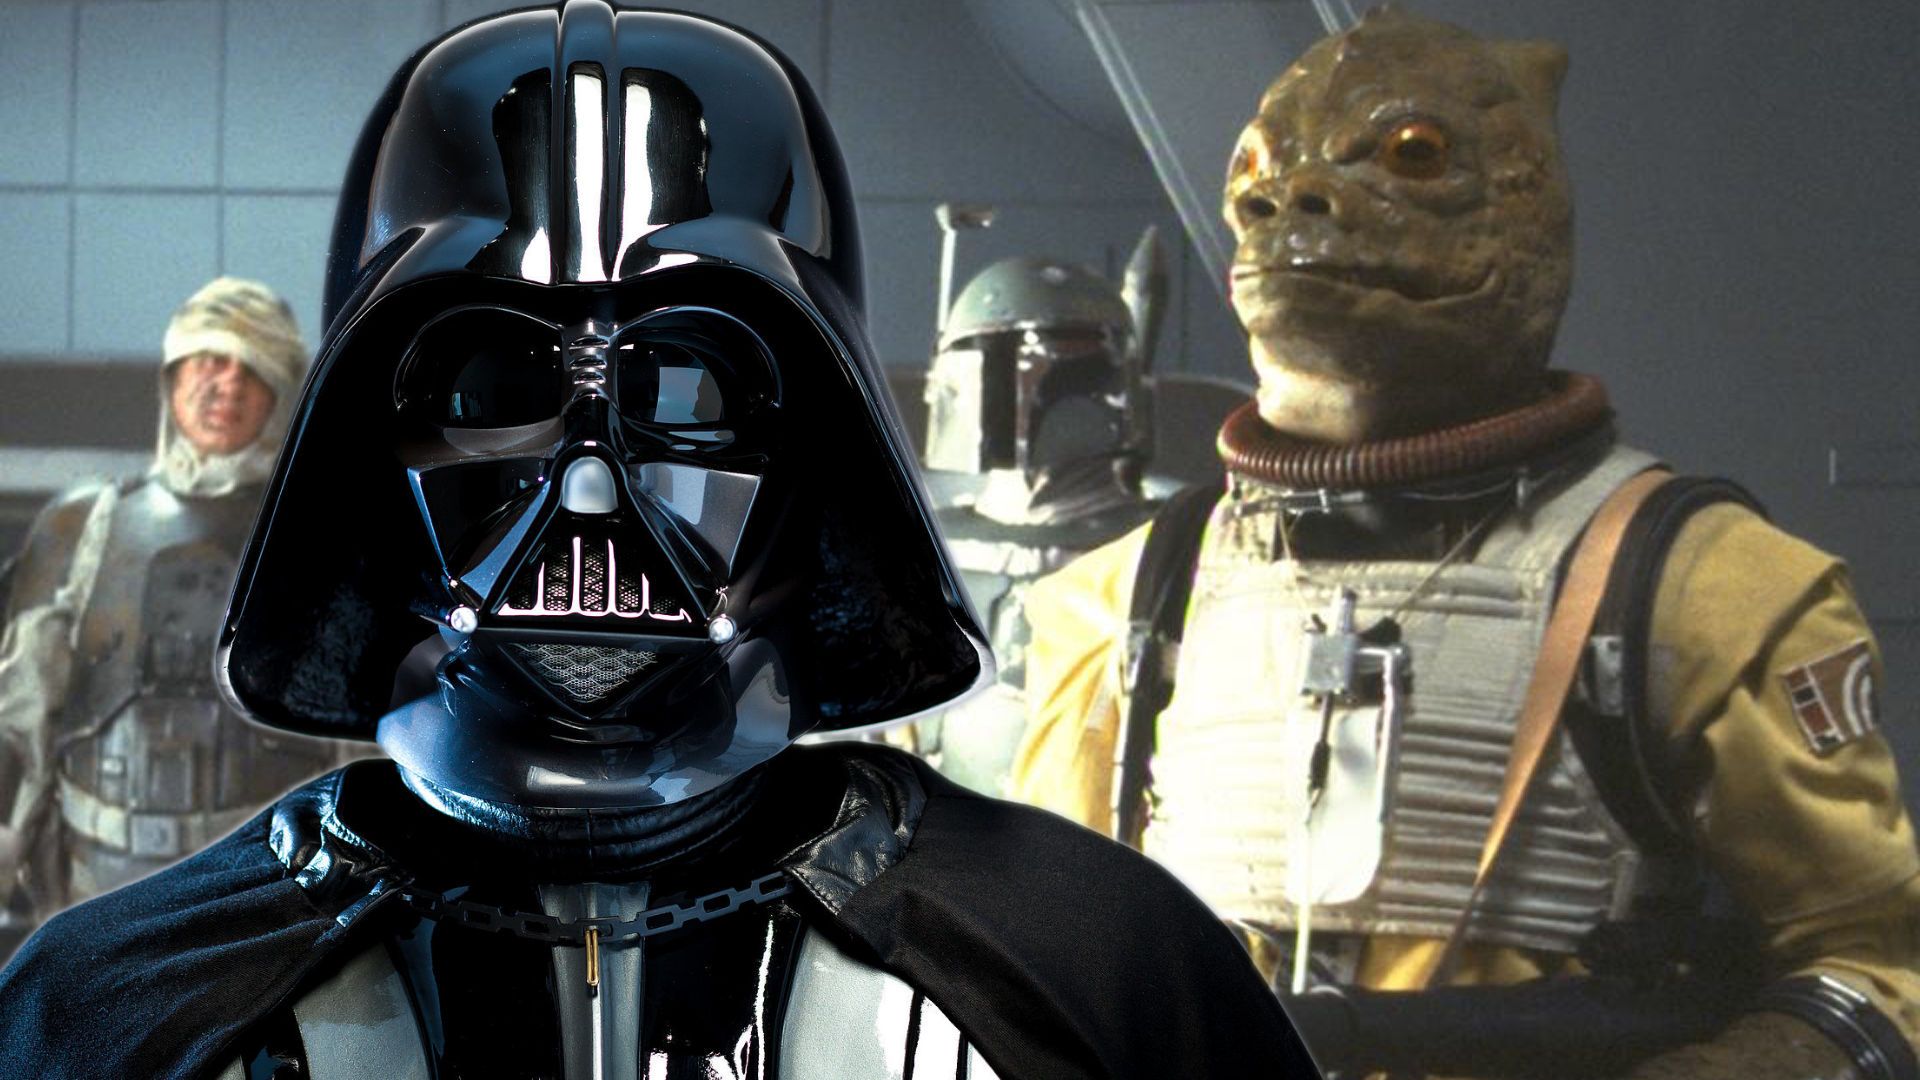 Darth-Vader-and-Empire-Strikes-Back-Bounty-Hunters-Video-Image.jpg